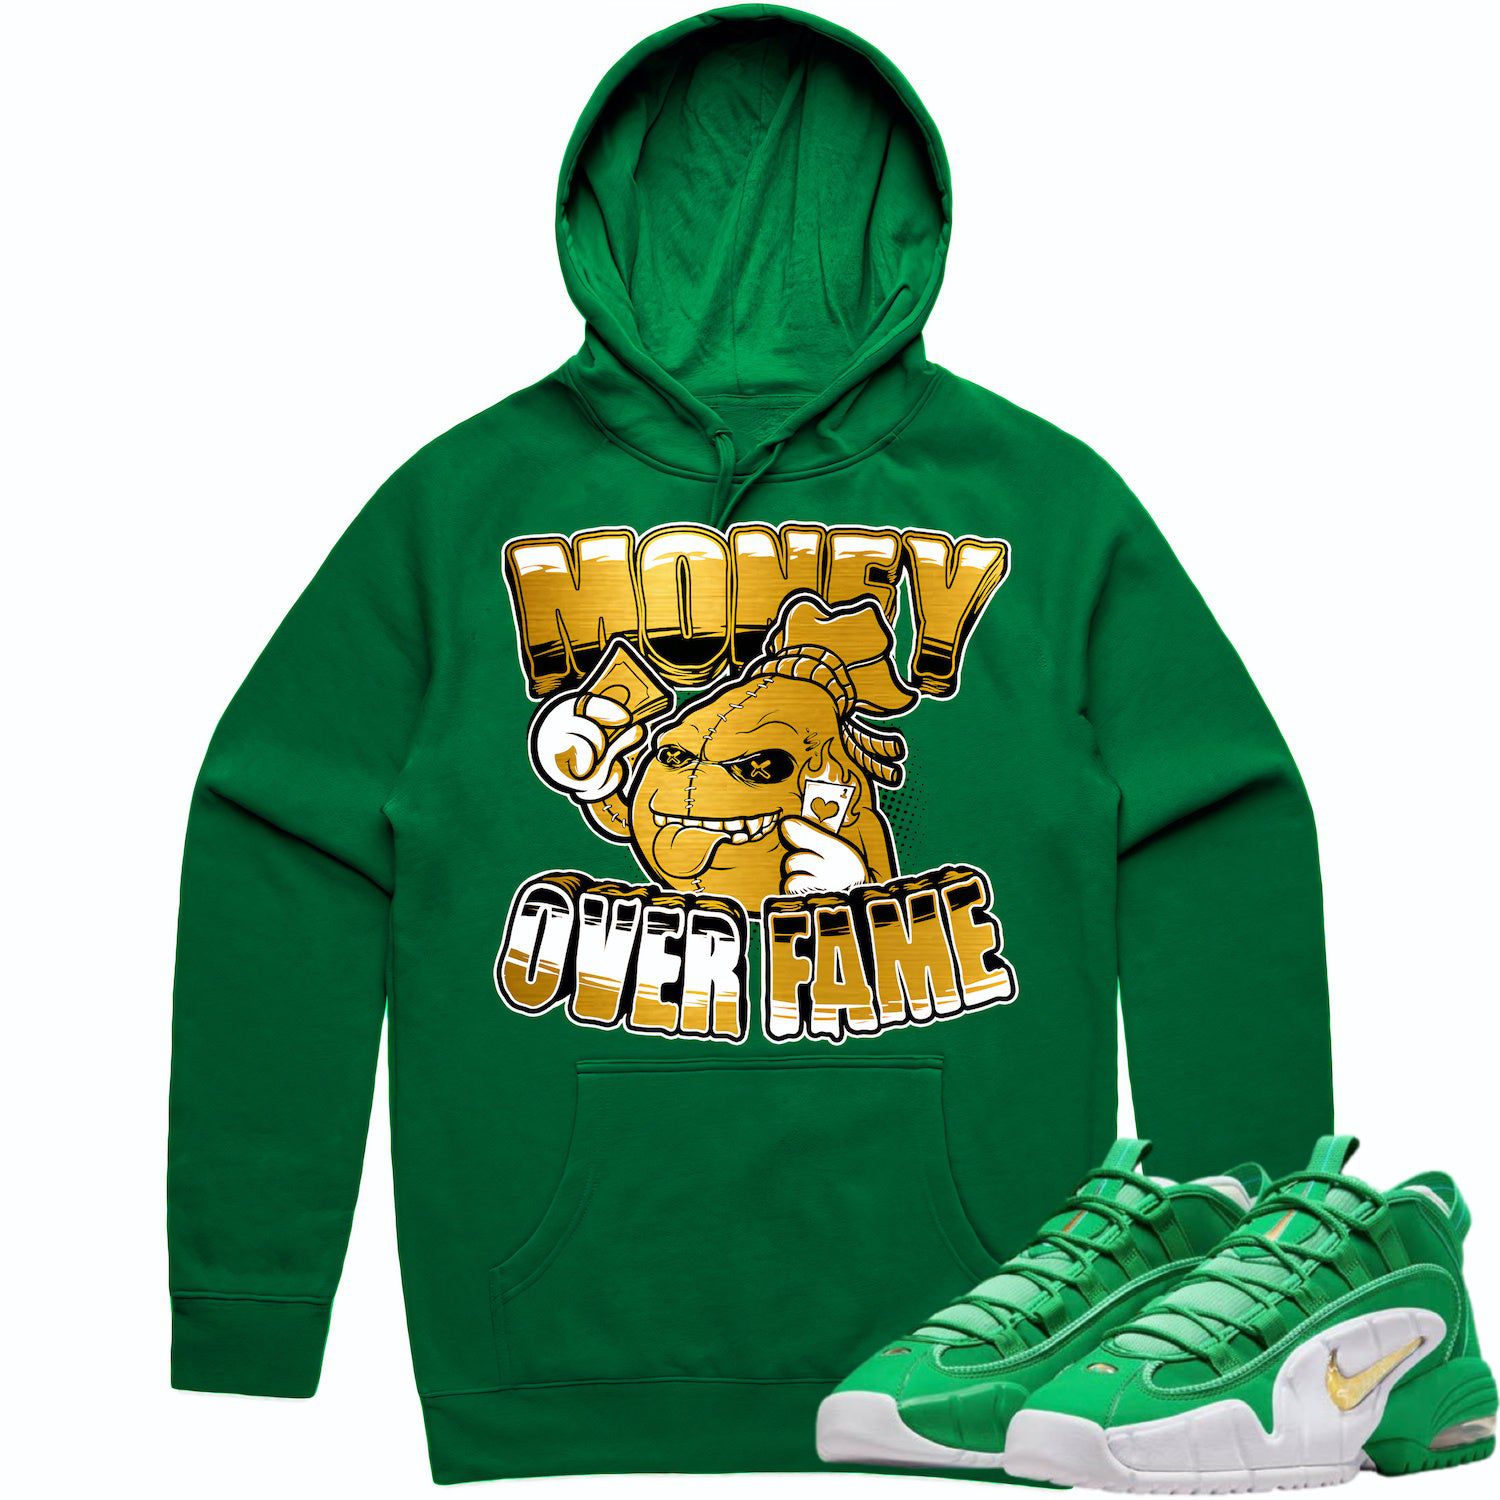 Penny 1 Stadium Green Hoodie - Penny 1s Hoodie - Money over Fame